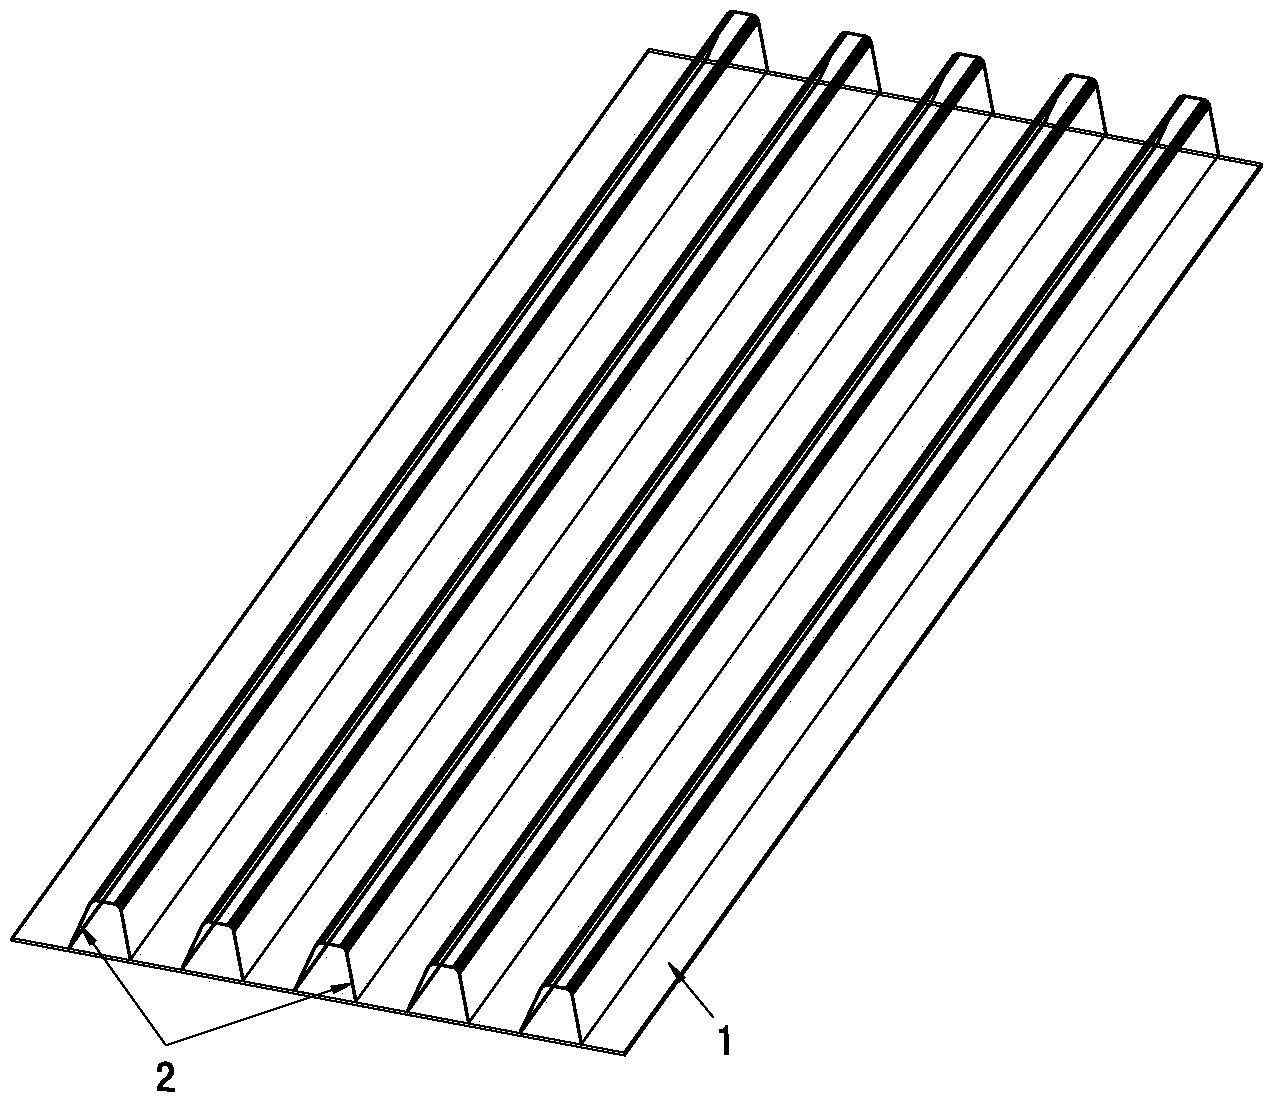 Flat position single-seam symmetrical welding method for orthotropic plate U-shaped rib corner welding seam robot